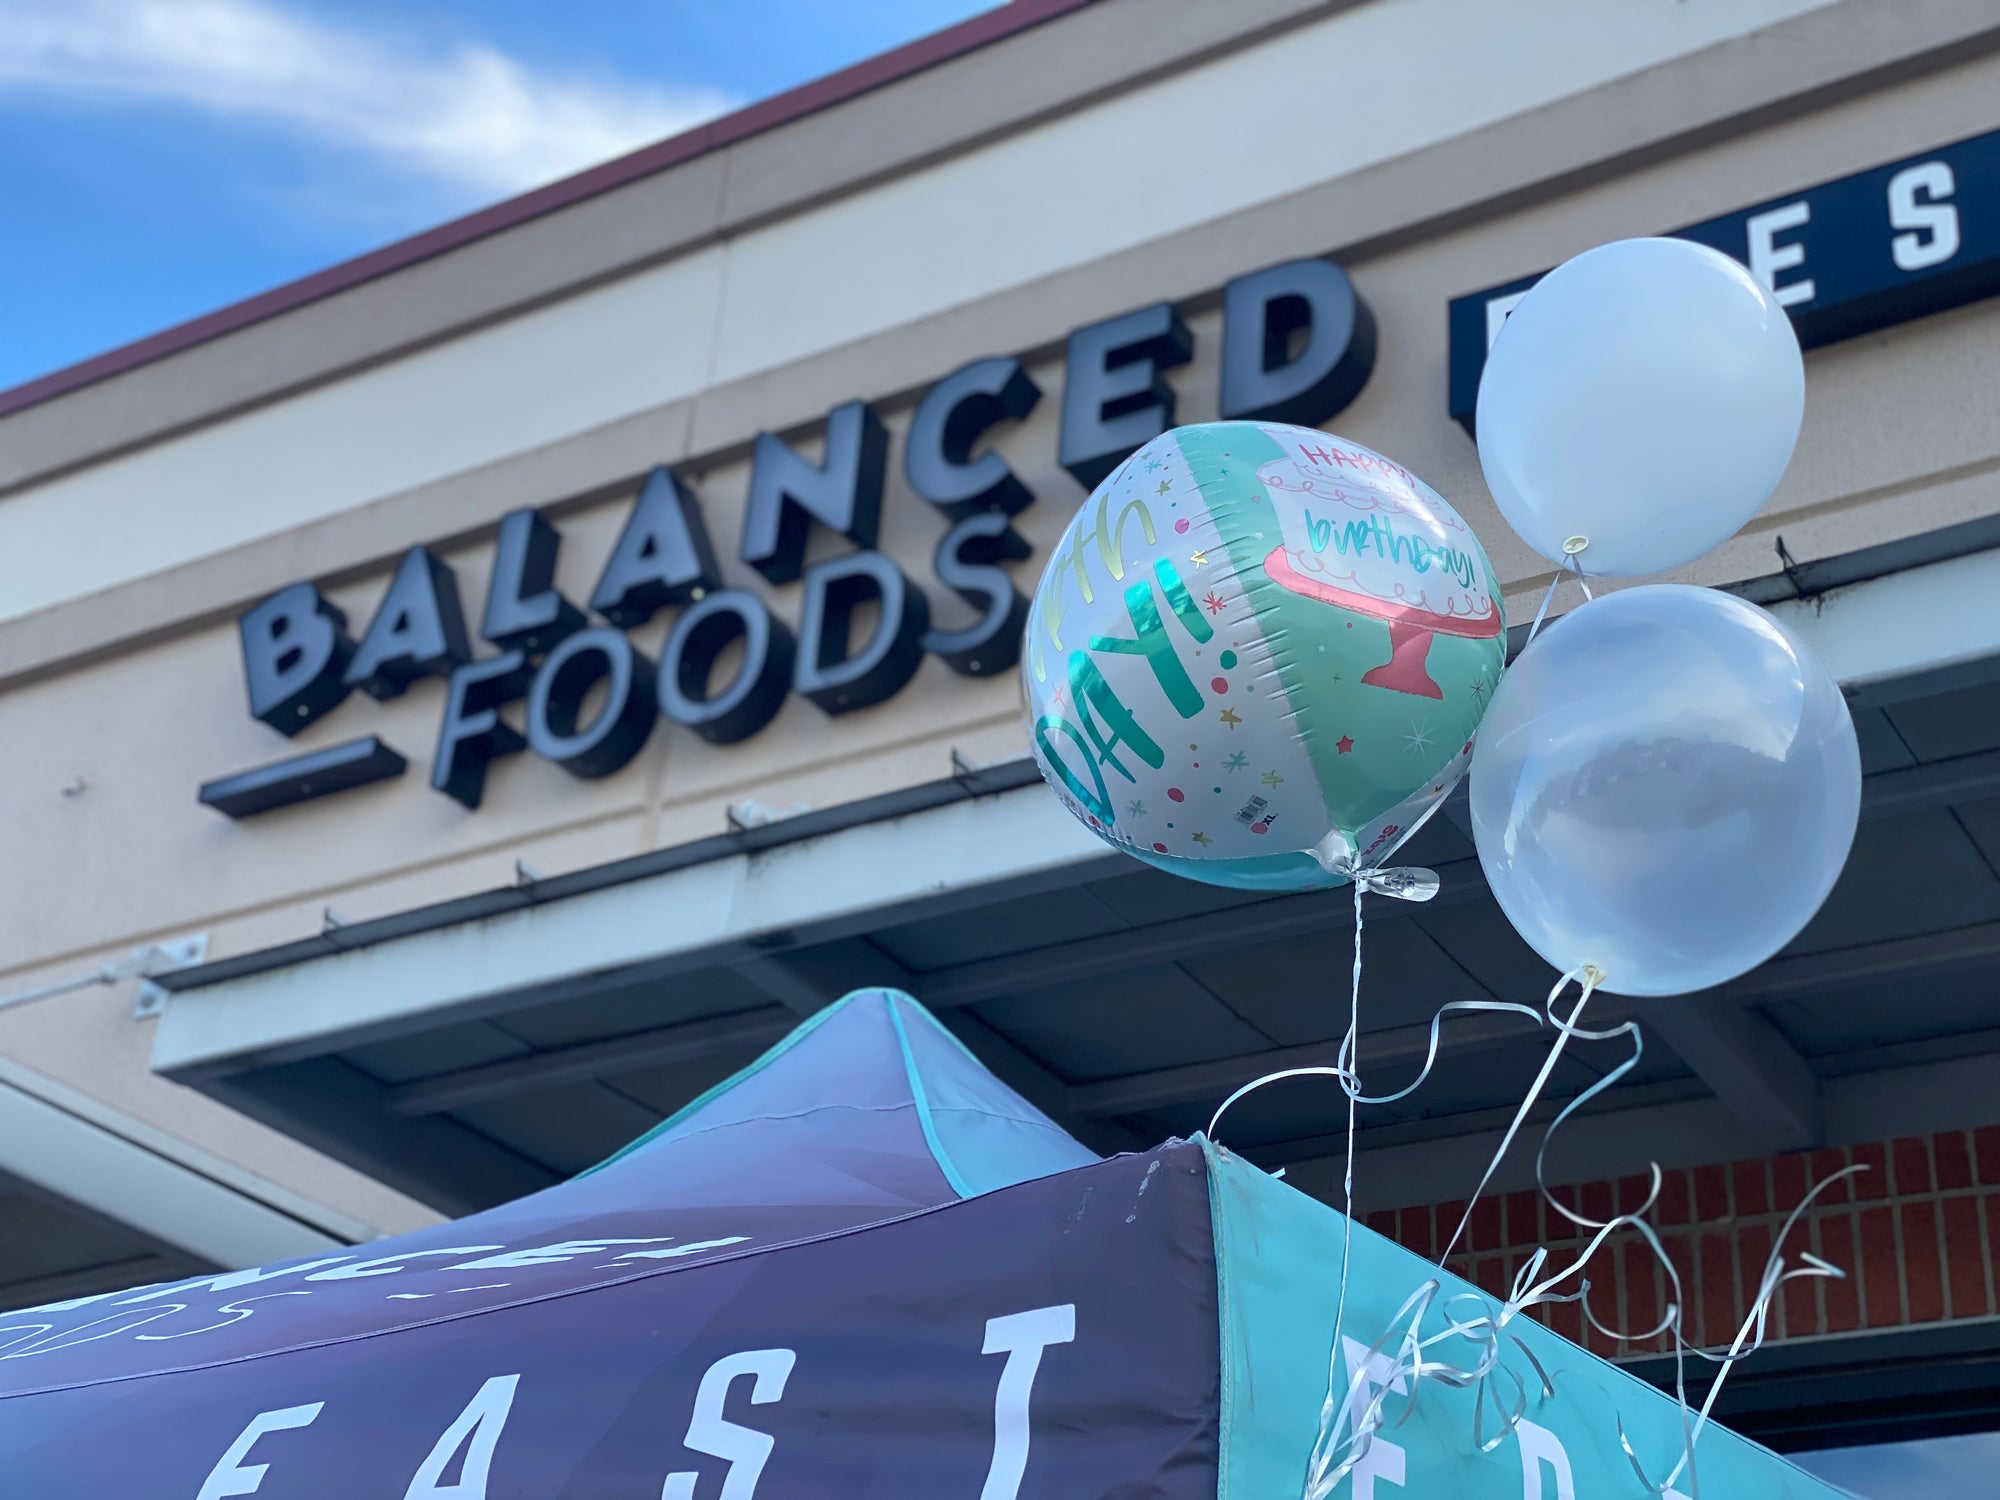 Balanced Foods Celebrates 4 Year Anniversary